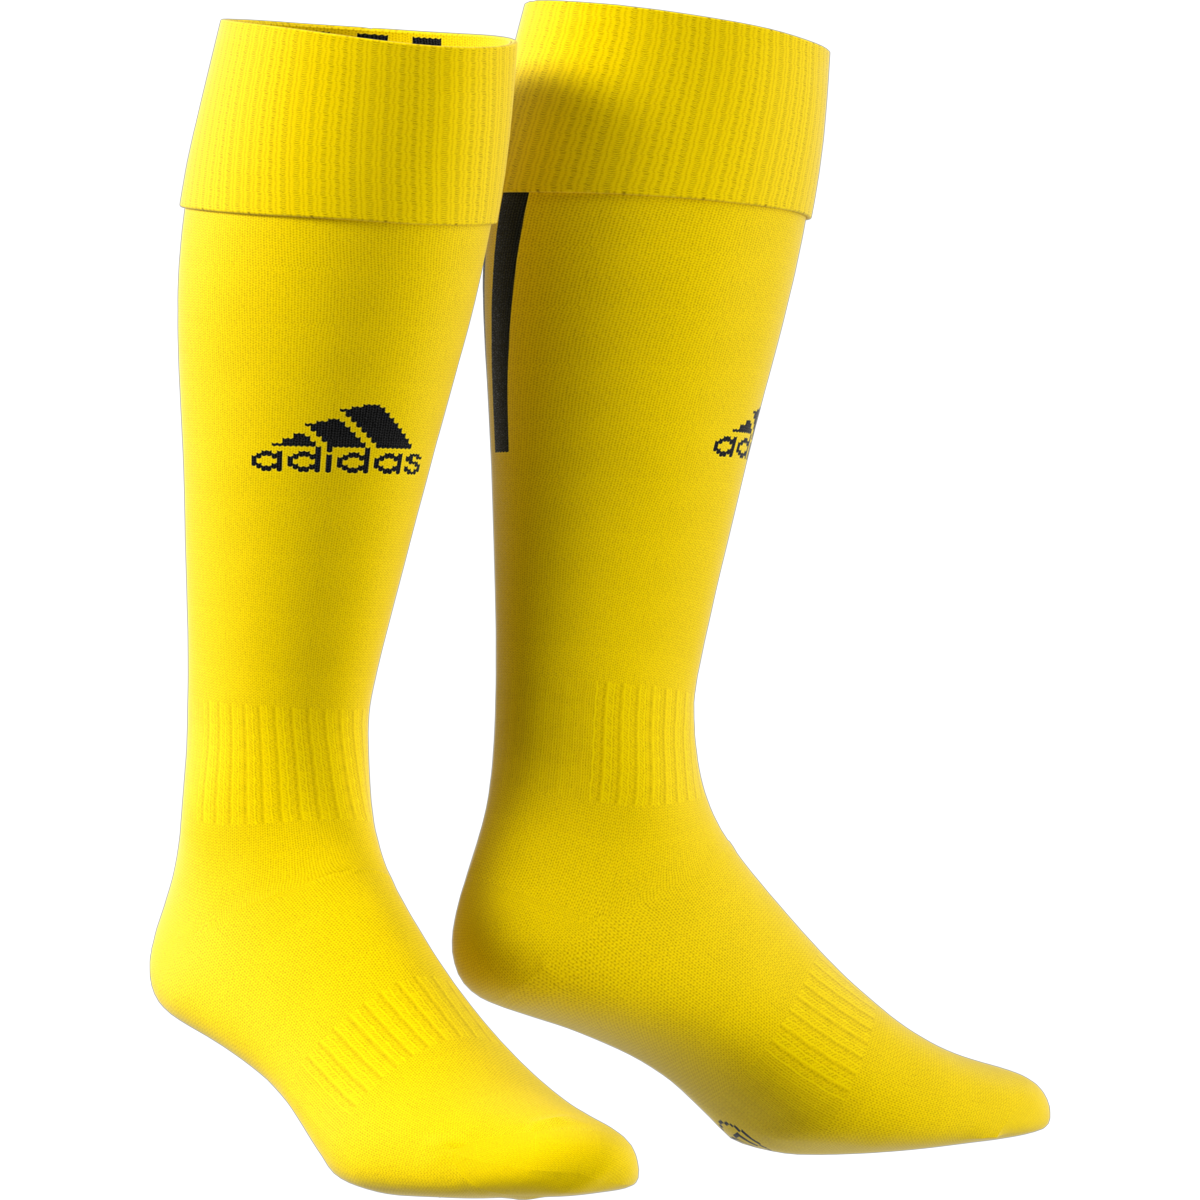 Adidas Santos 18 žlutá/černá EU 27/30